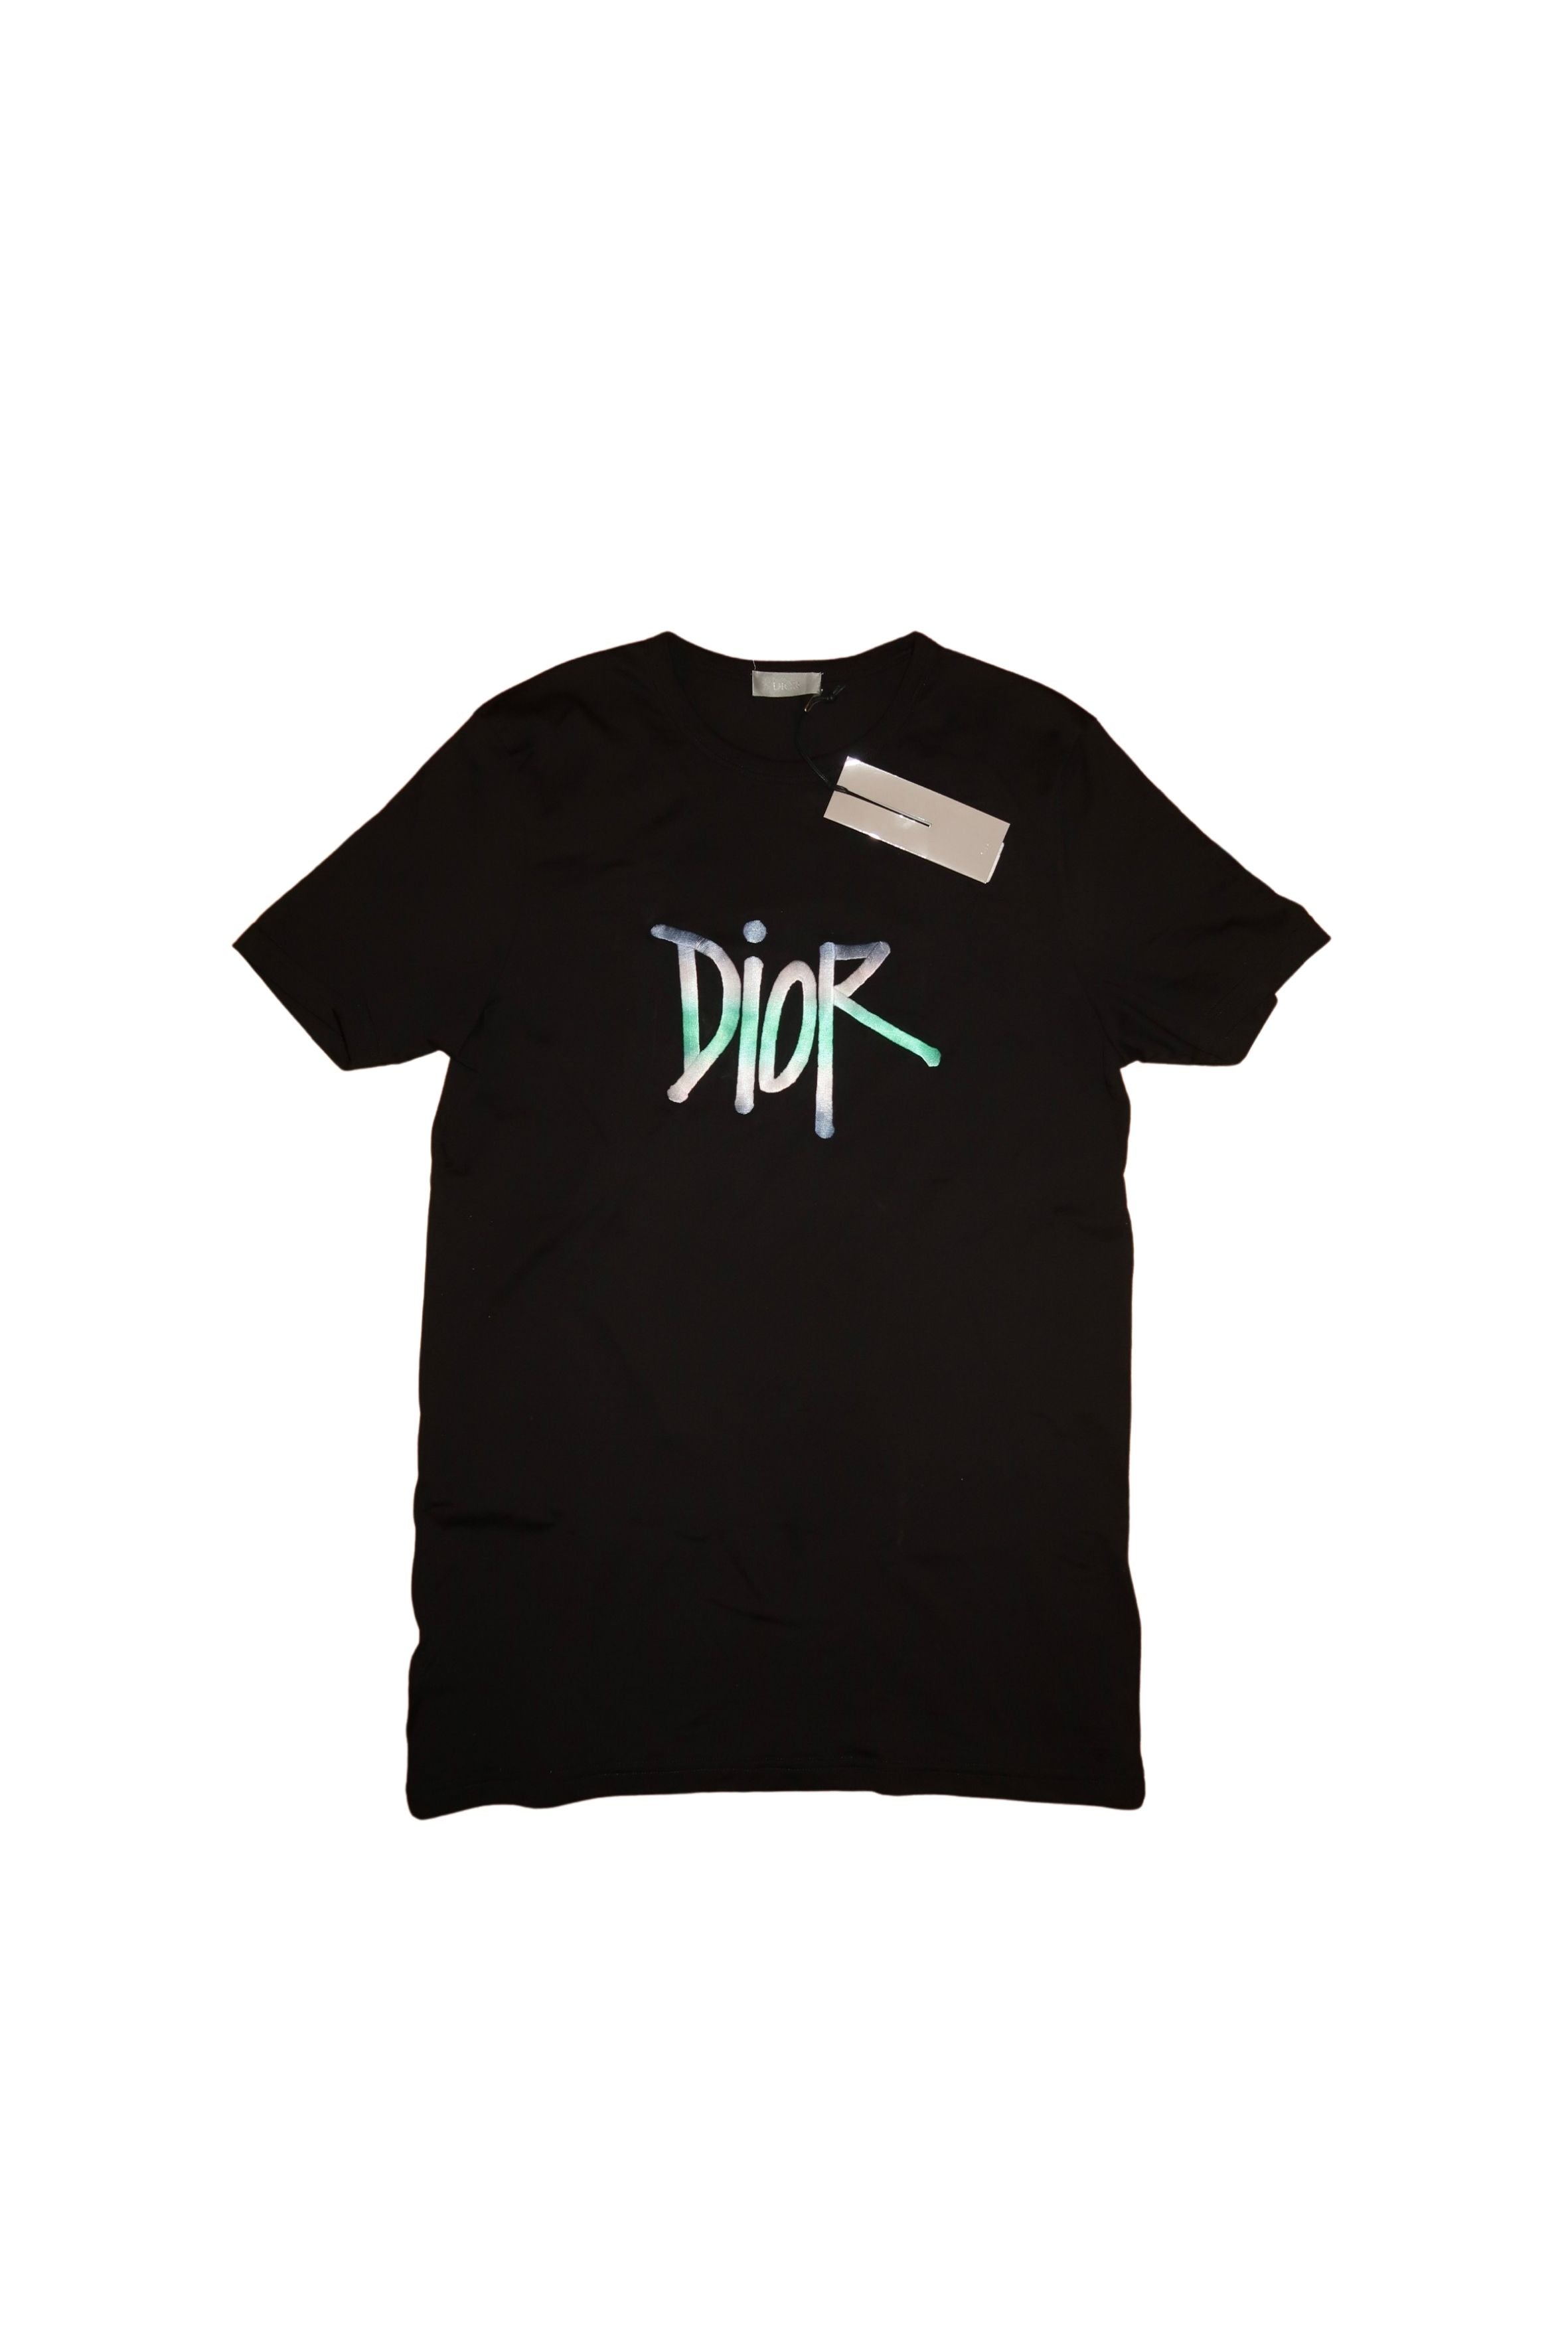 Dior x Shawn Stussy Logo T-Shirt Size Small